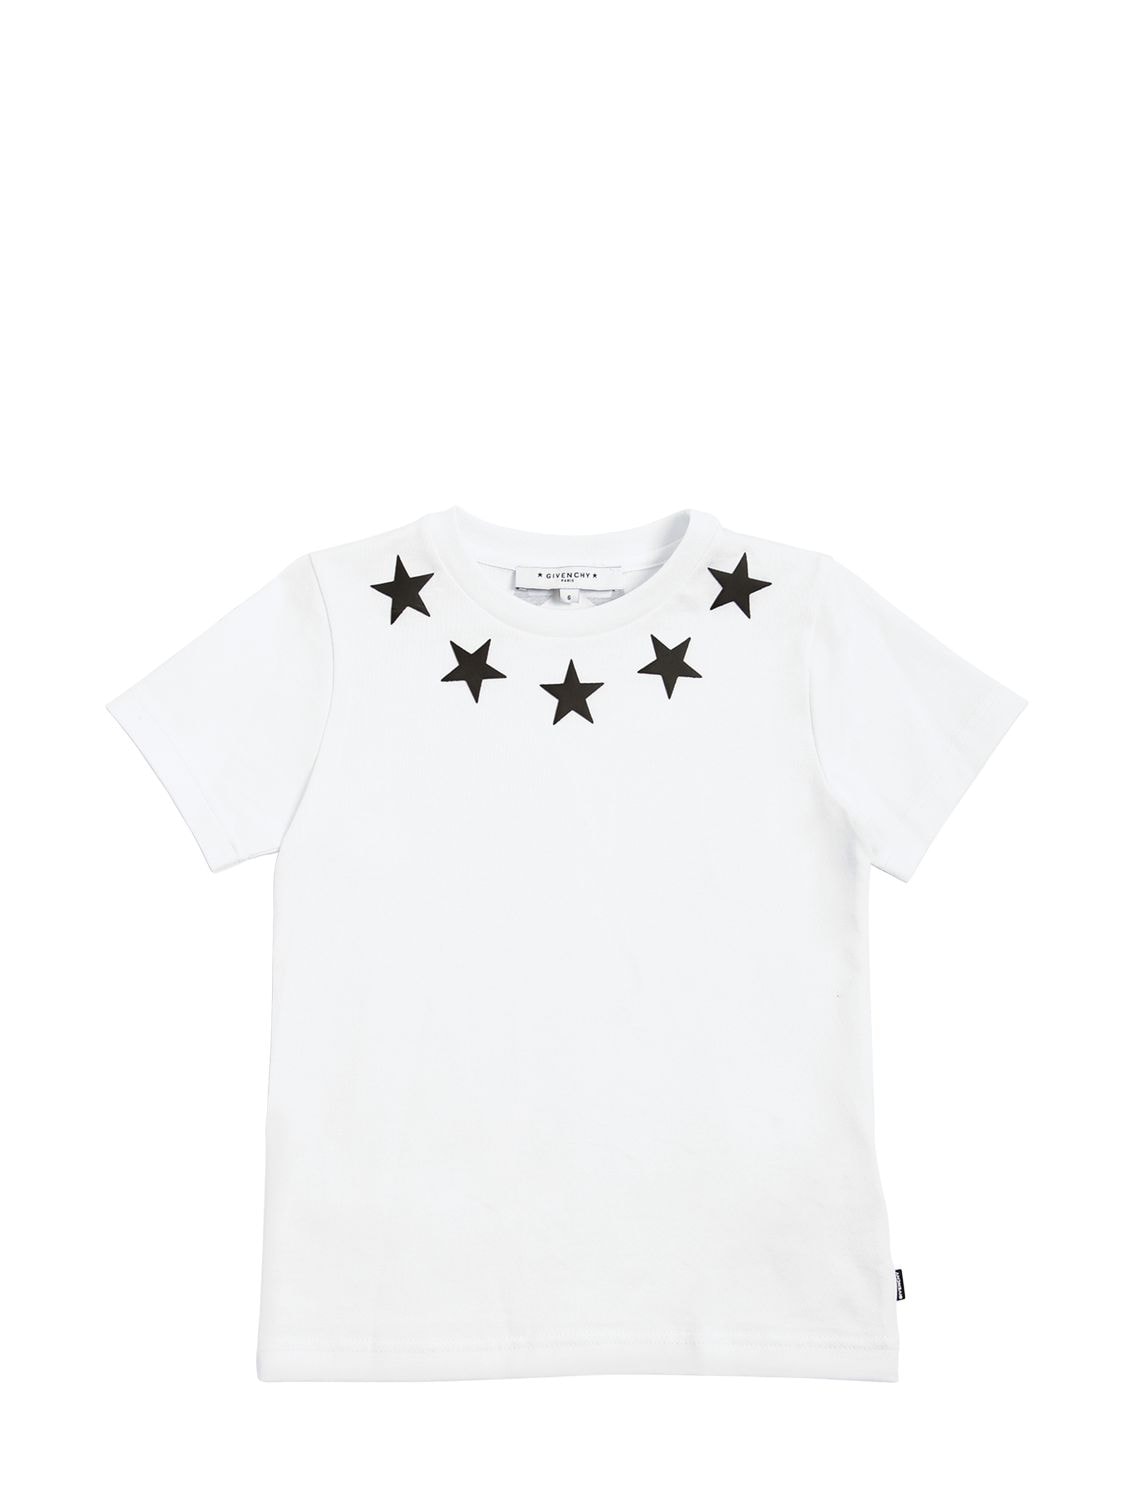 givenchy star print t shirt